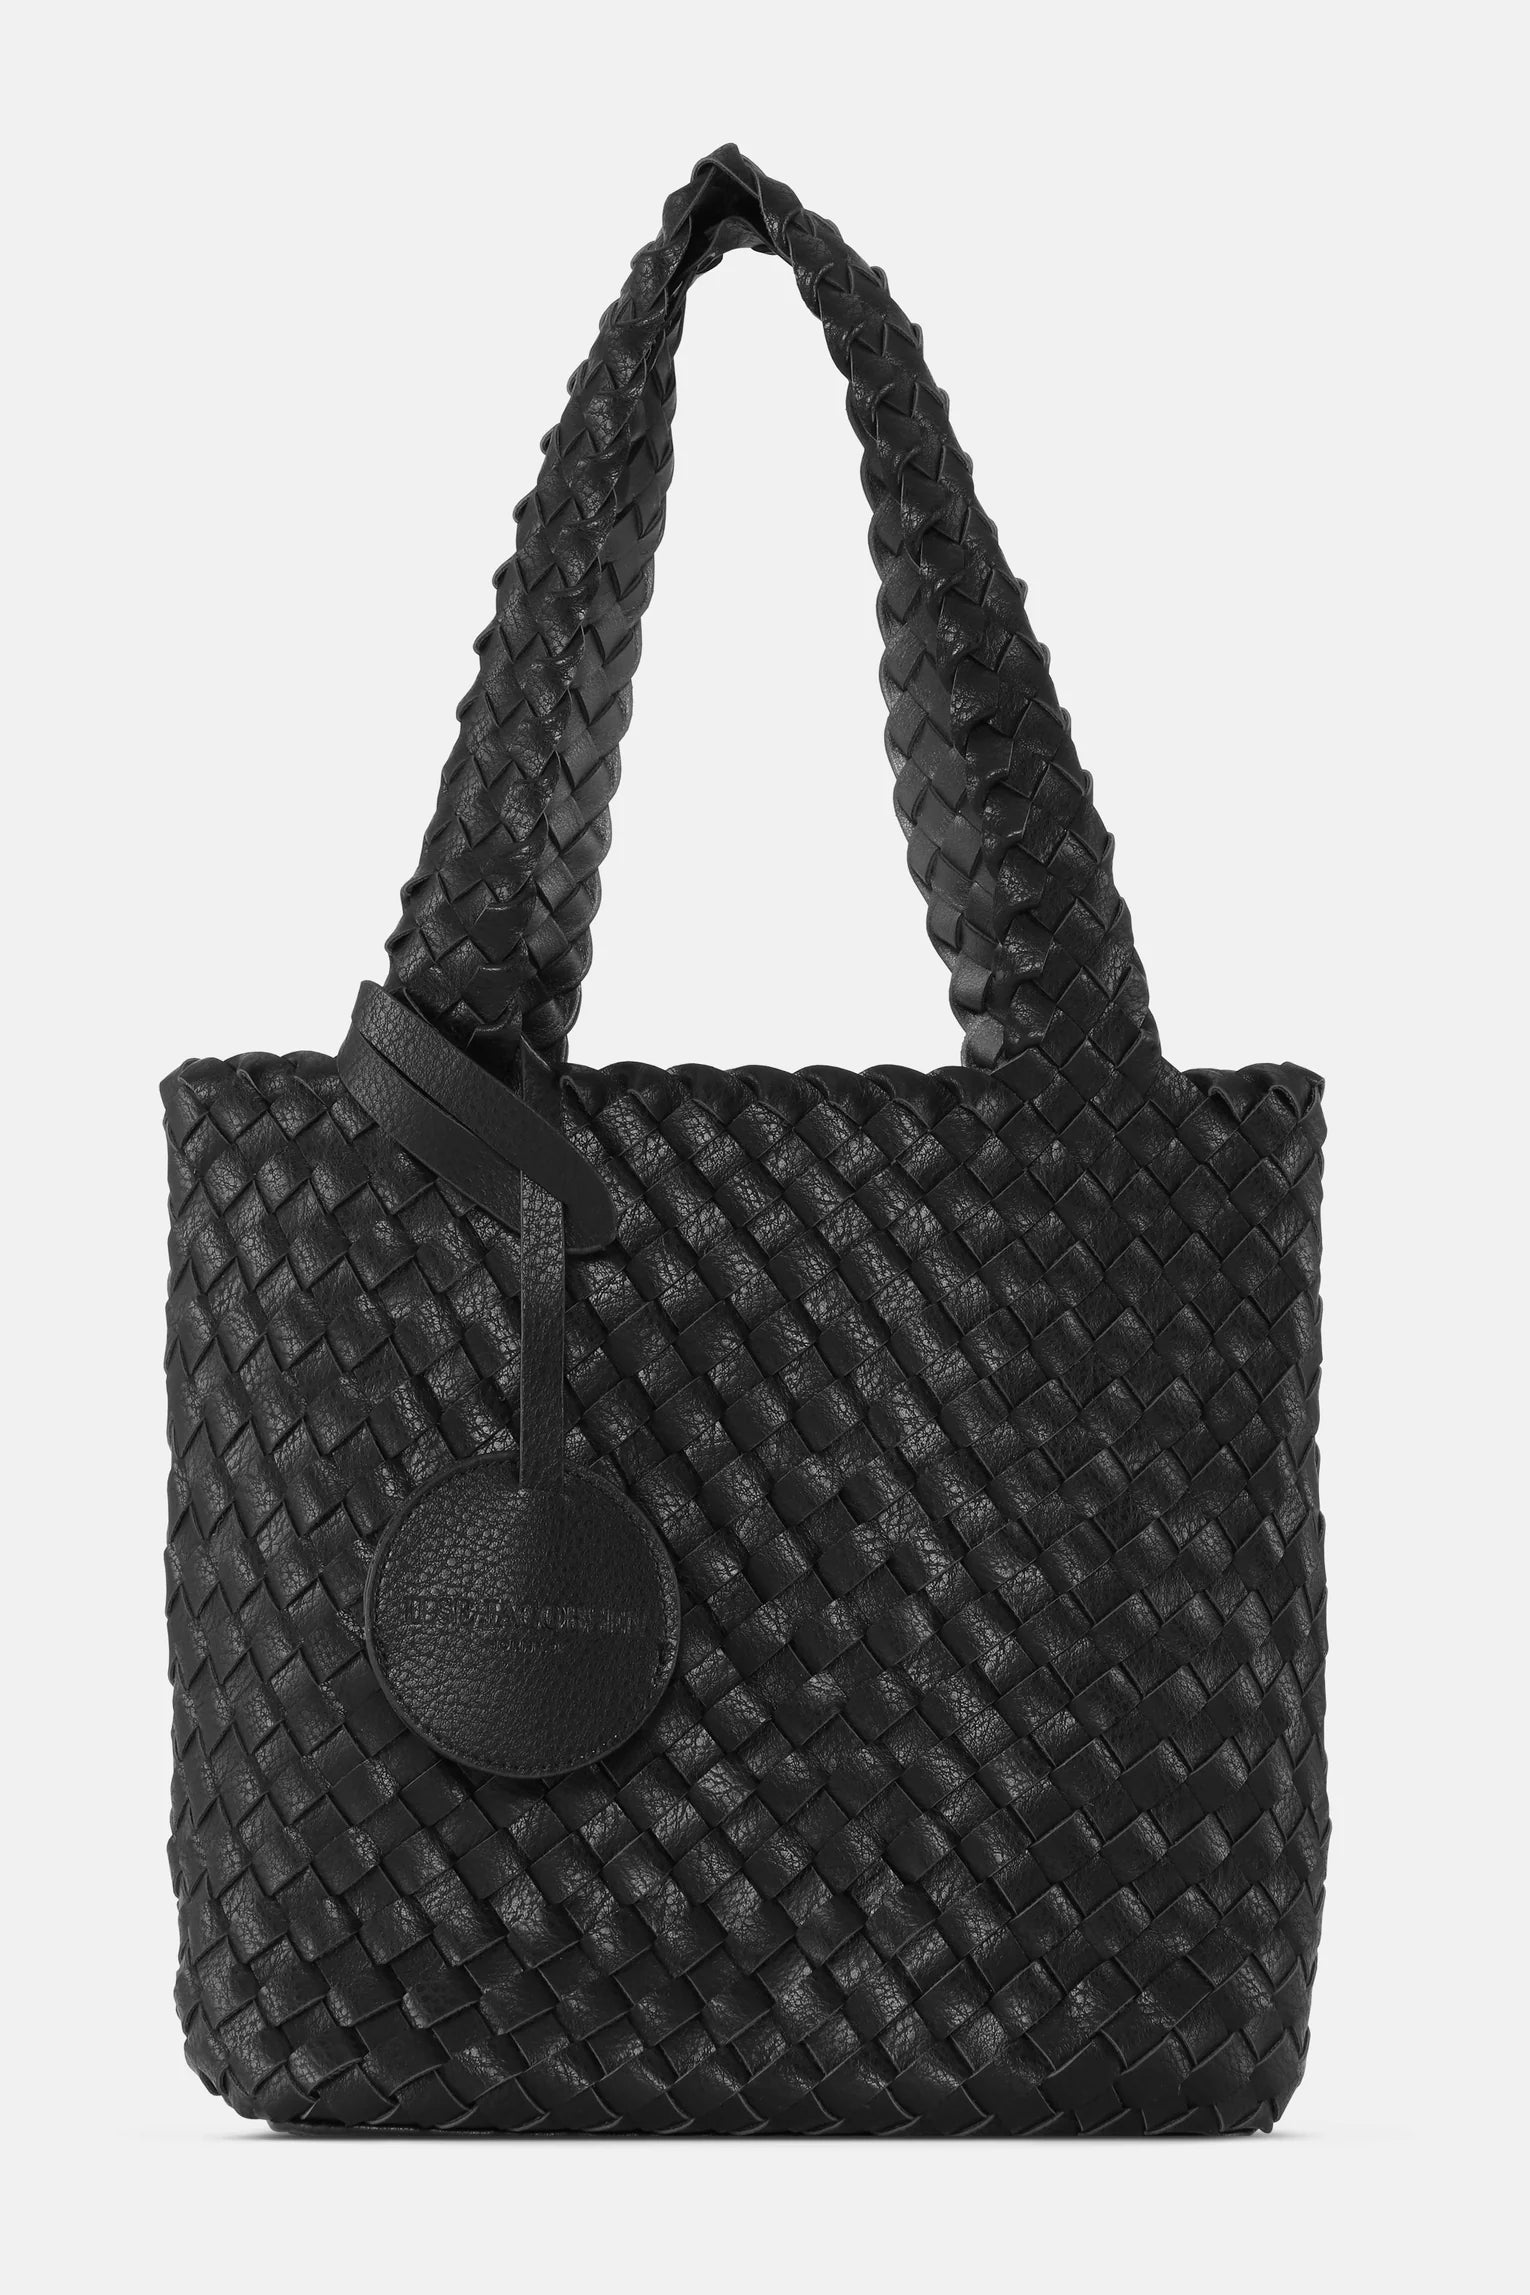 Ilse Jacobsen - Small Tote Bag